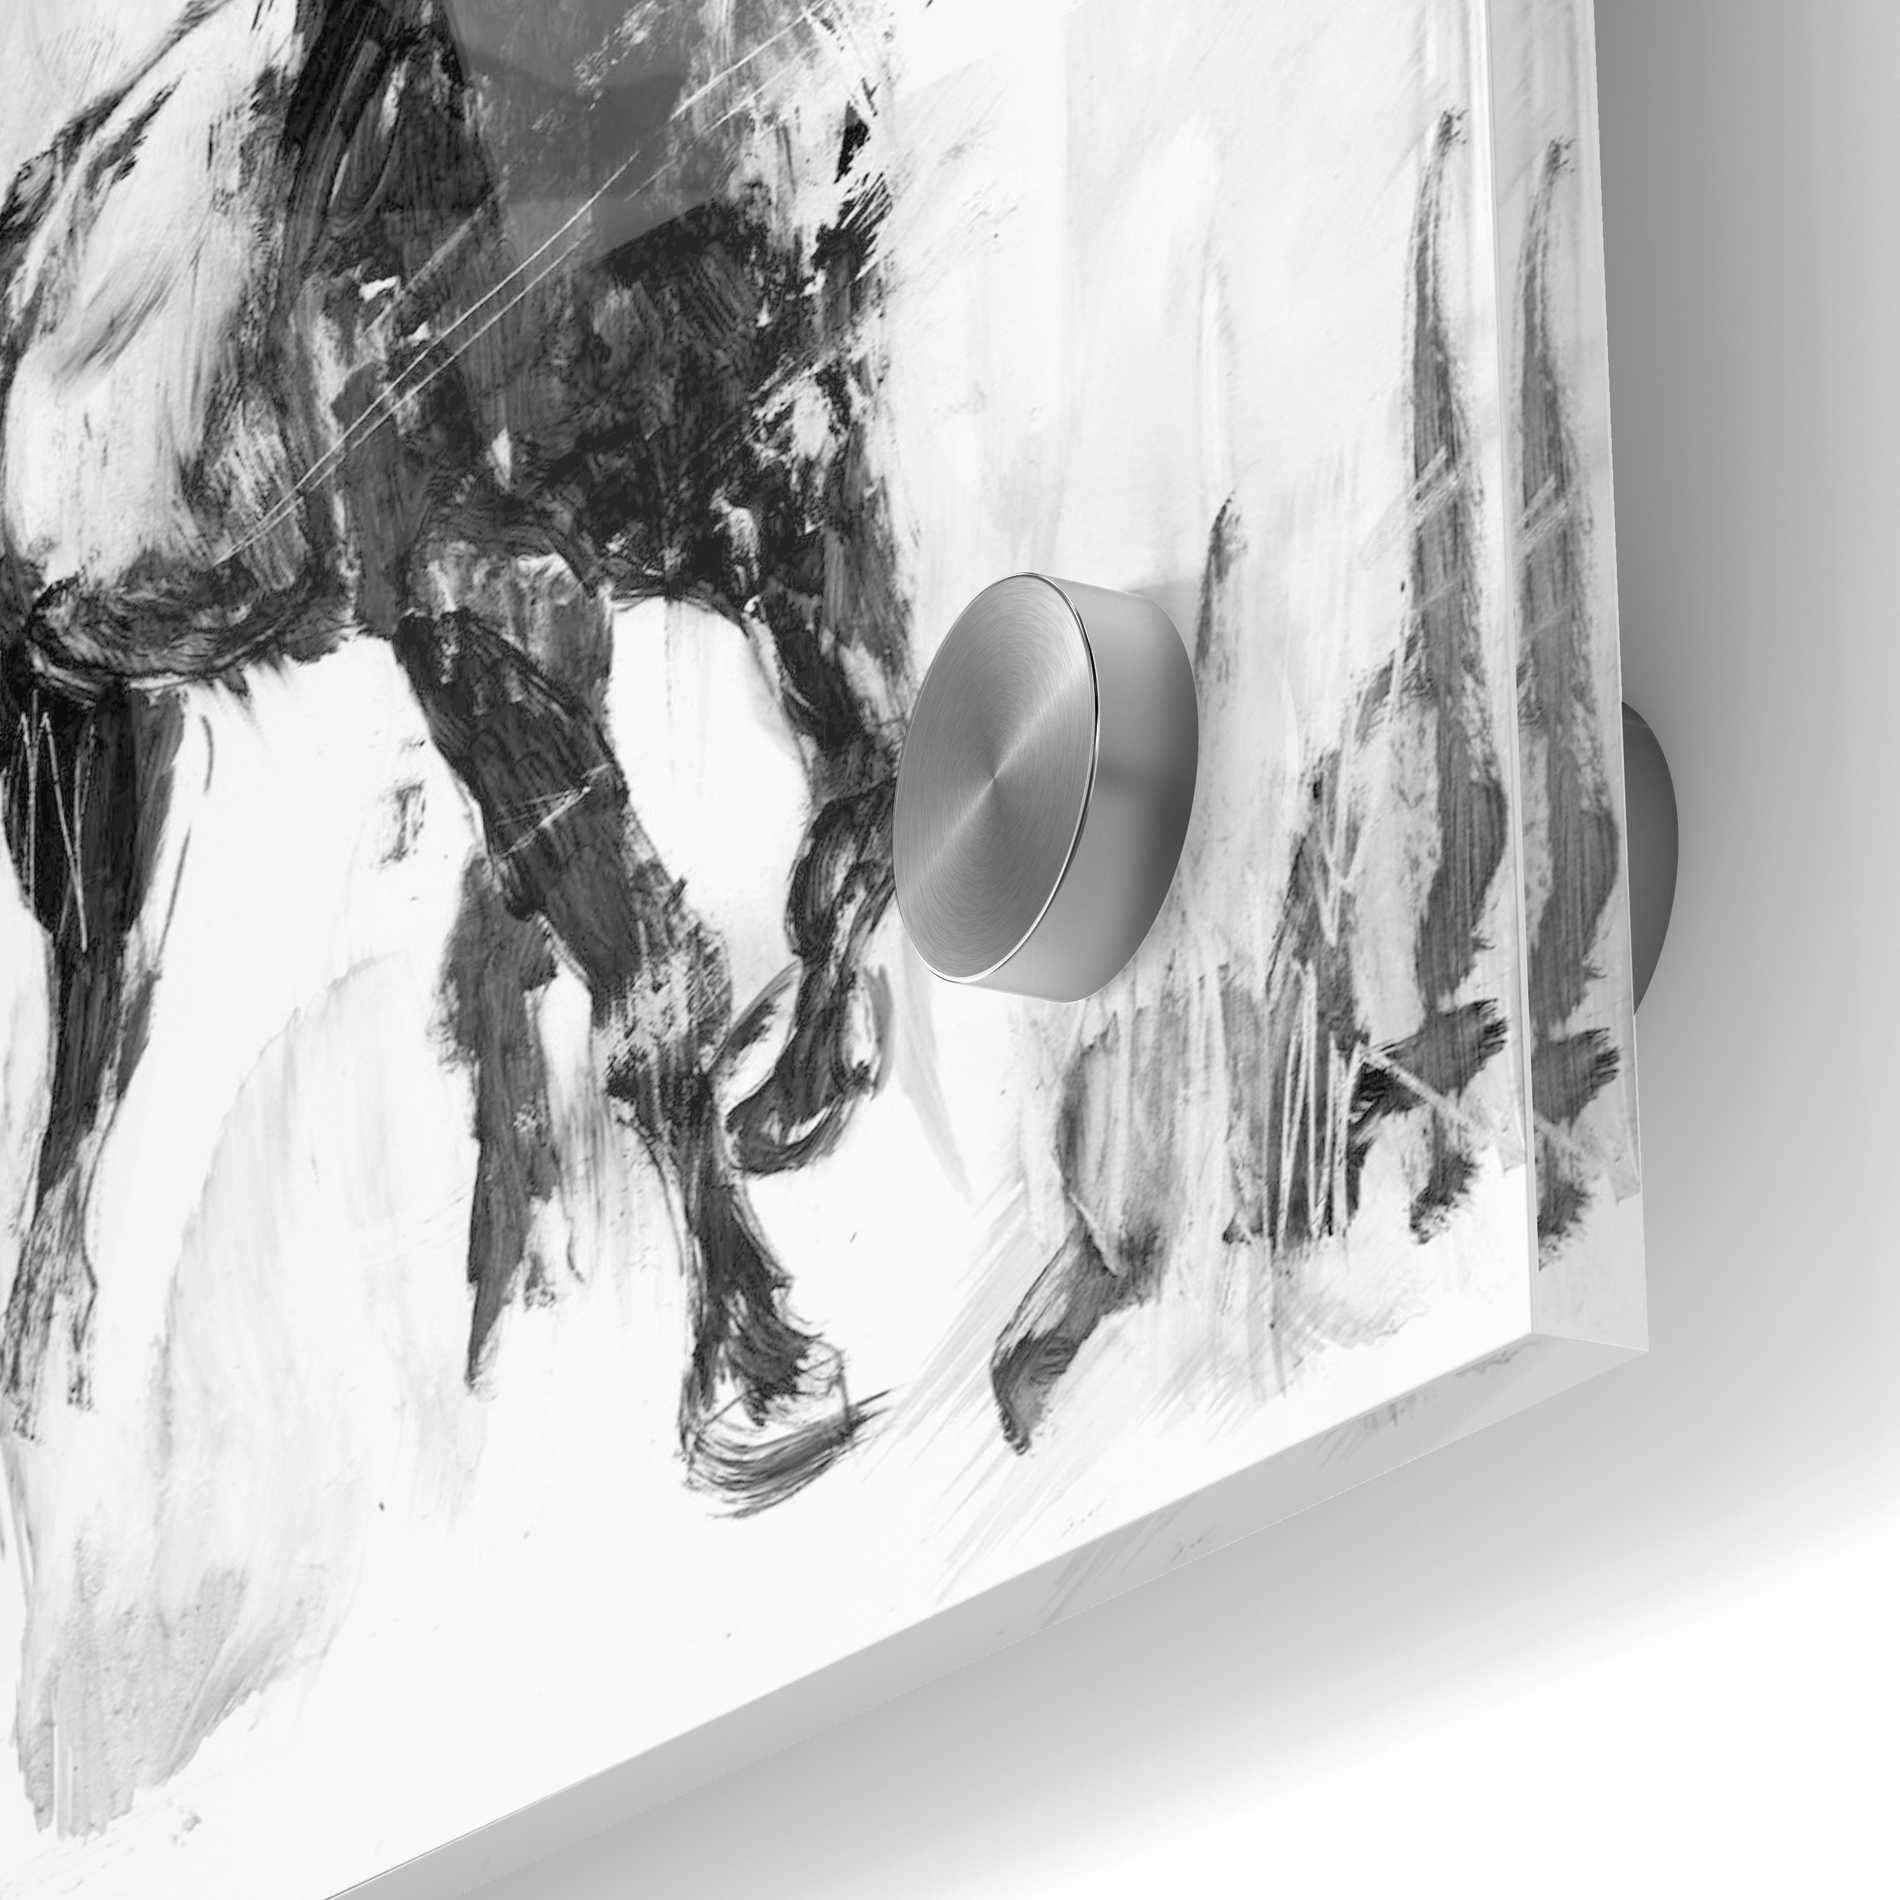 Epic Art 'Rustic Stallion I' by Ethan Harper Acrylic Glass Wall Art,24x36